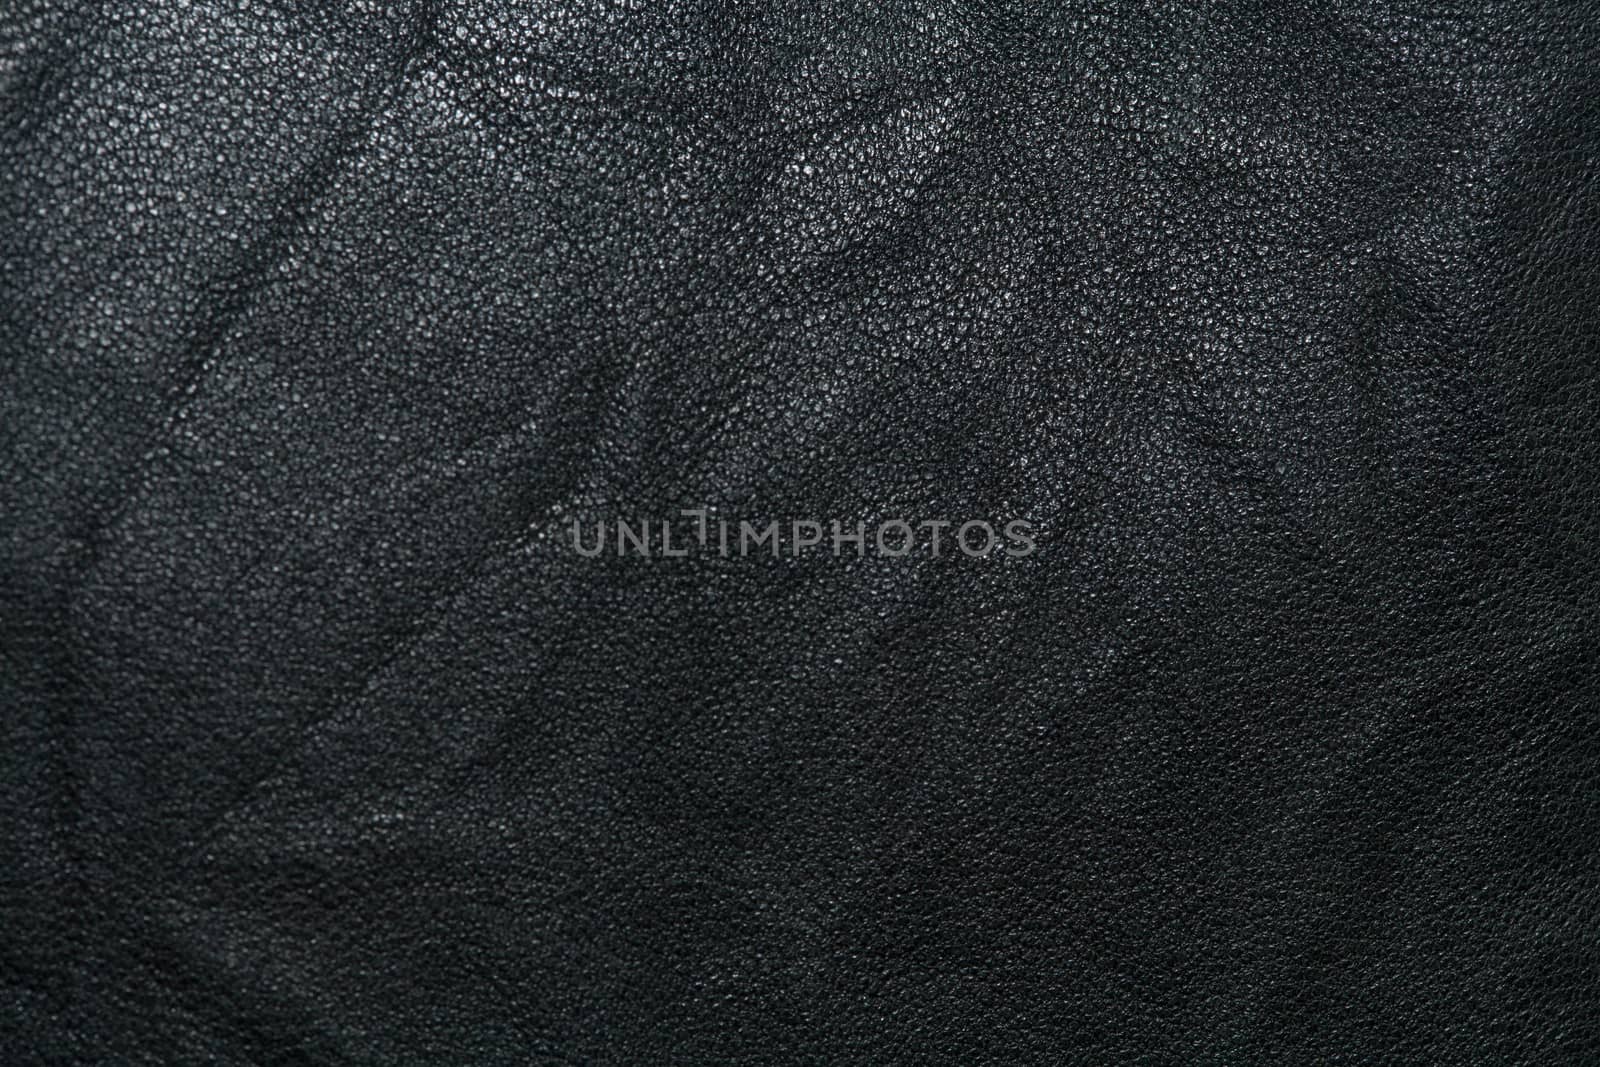 Black dark leather background or texture